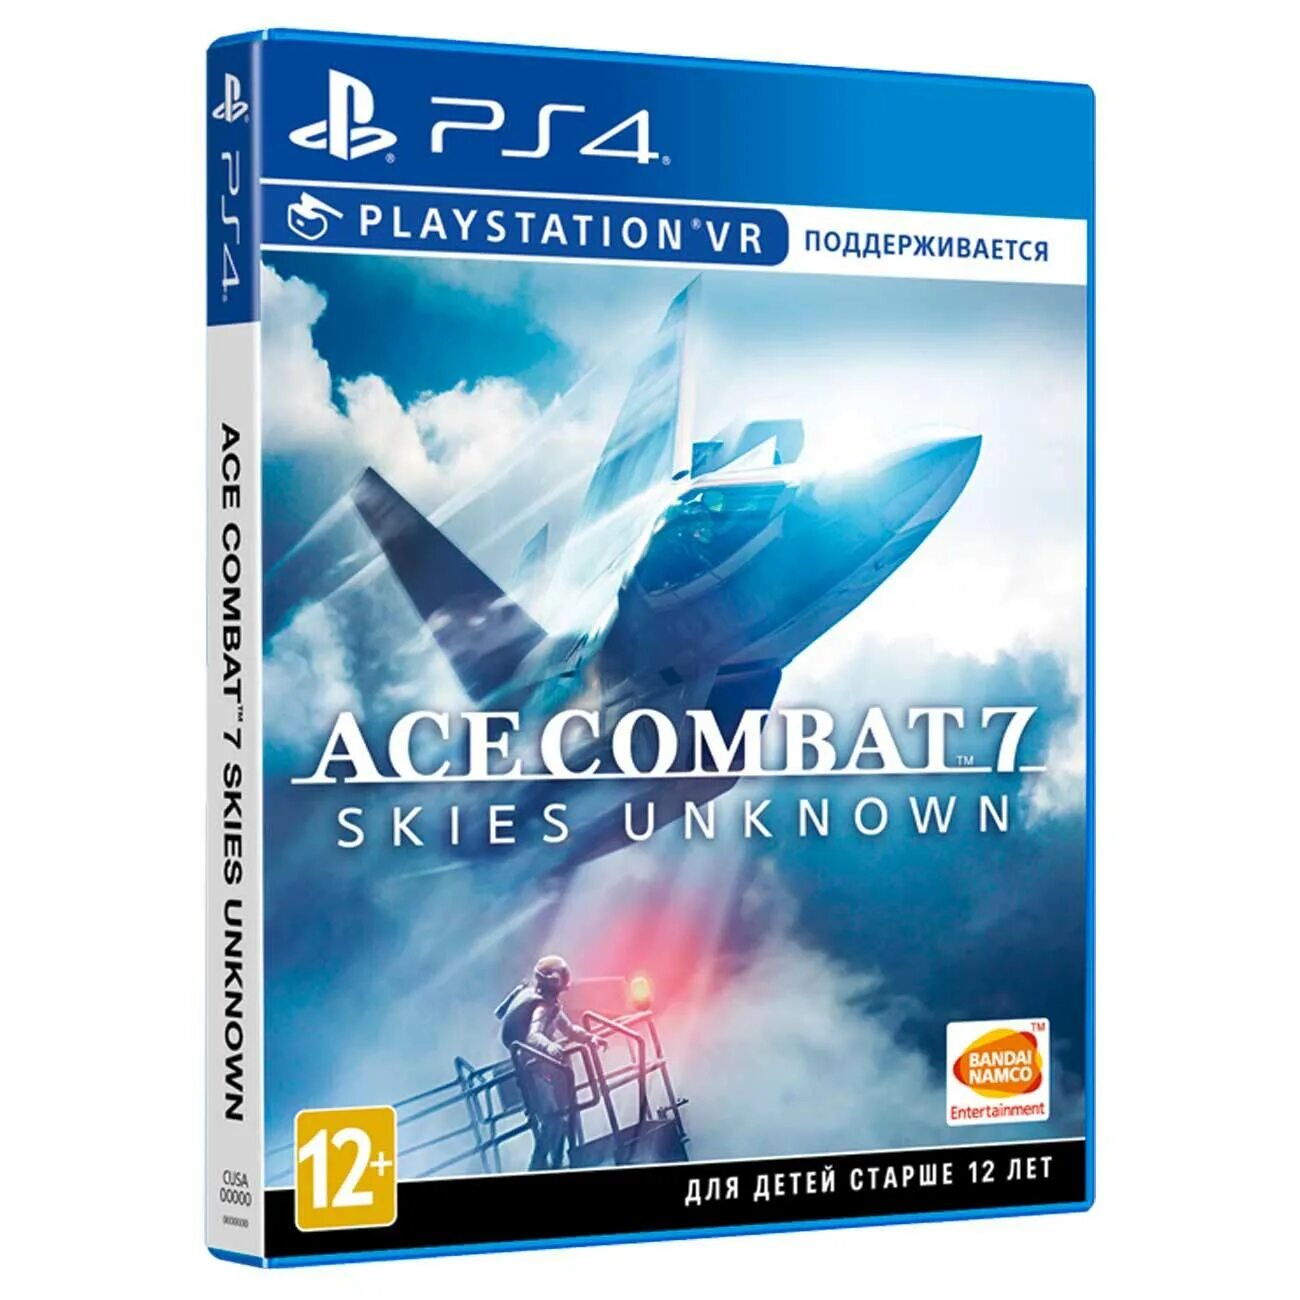 Ace combat 7 купить. Ace Combat 7 Skies Unknown PLAYSTATION 4. Ace Combat 7 обложка. Ace Combat 7 Михаэль. Ace Combat 7: Skies Unknown (поддержка PS VR) [ps4, русские субтитры].